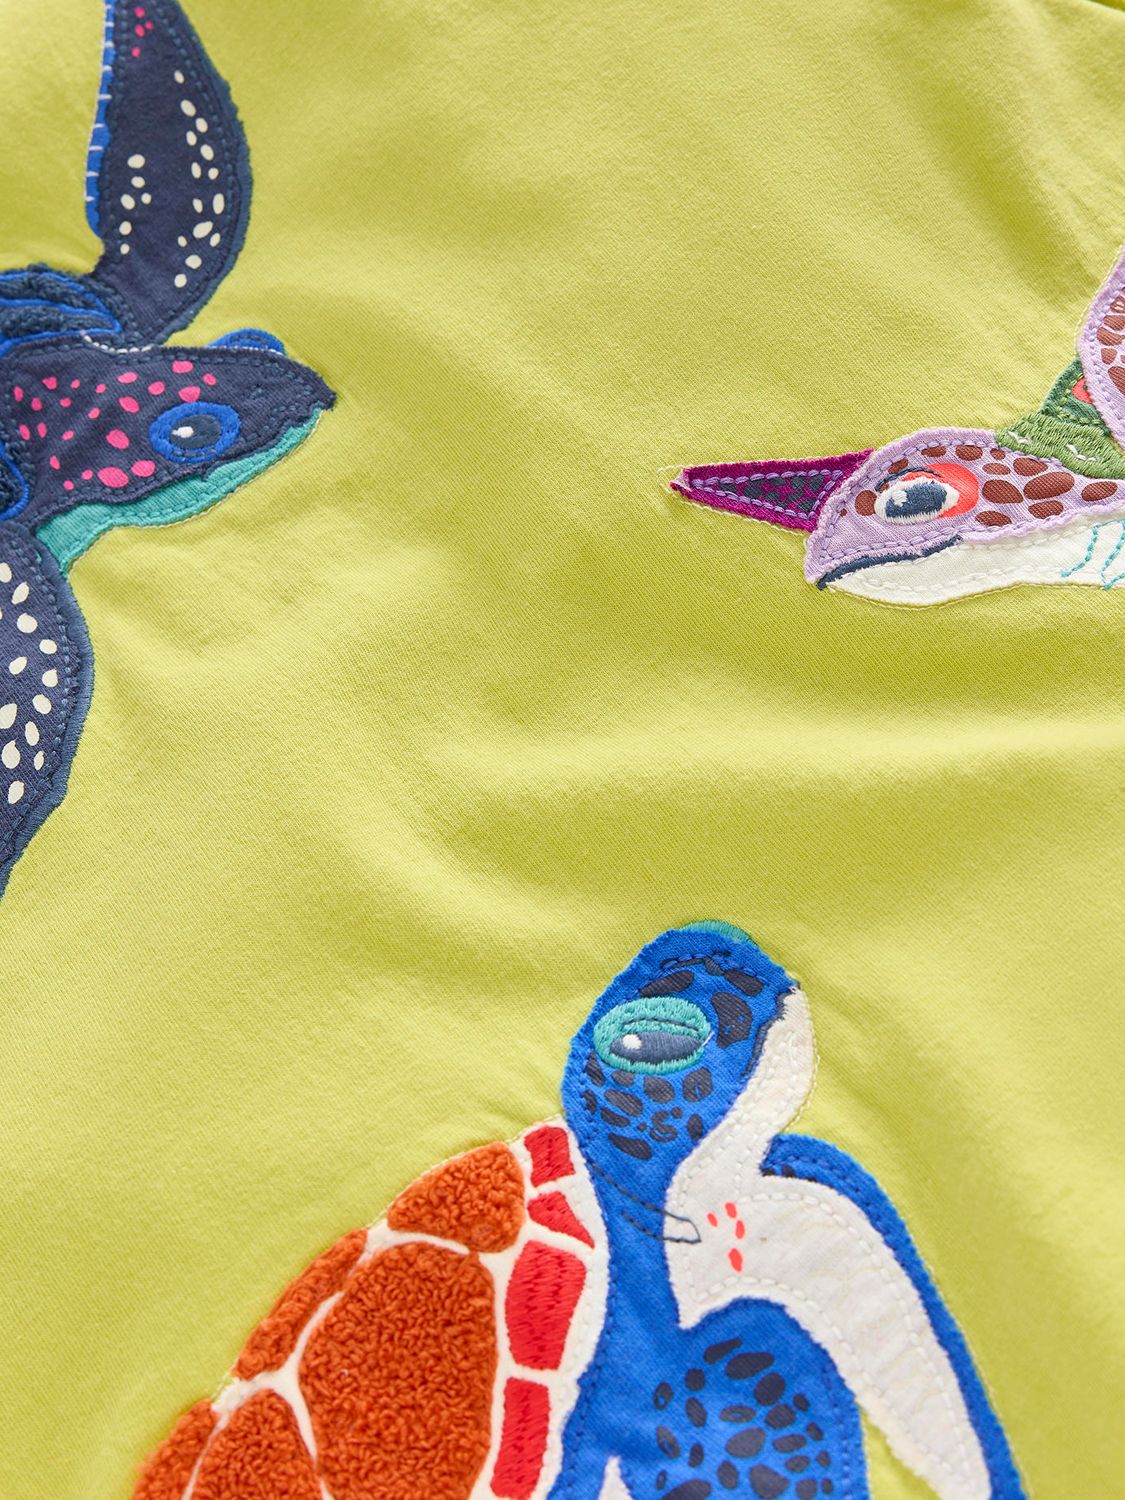 Buy Mini Boden Kids' Turtles Applique T-Shirt, Yellow Online at johnlewis.com